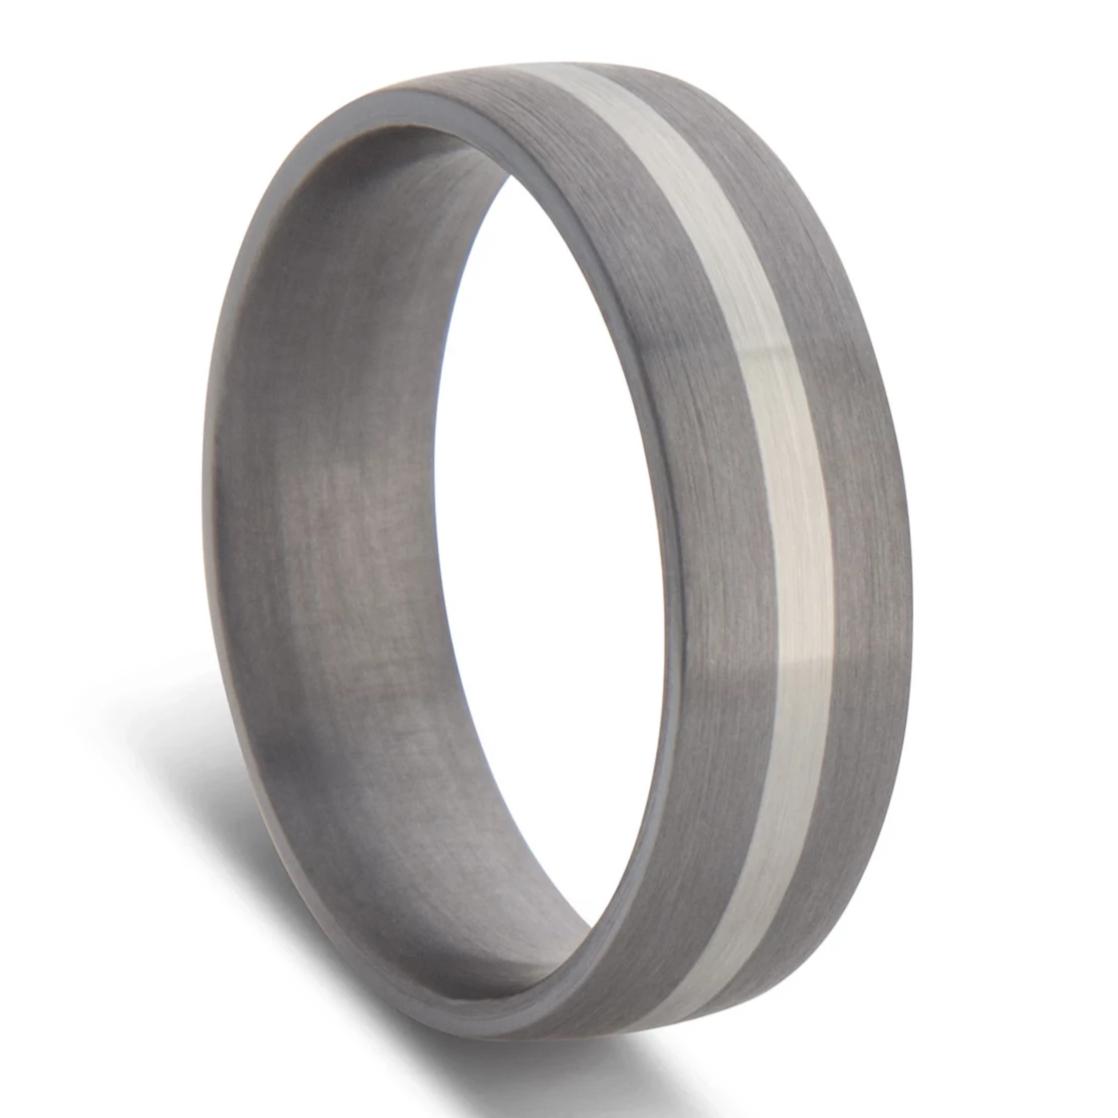 Tantalum and Platinum 600 Inlay Wedding Ring